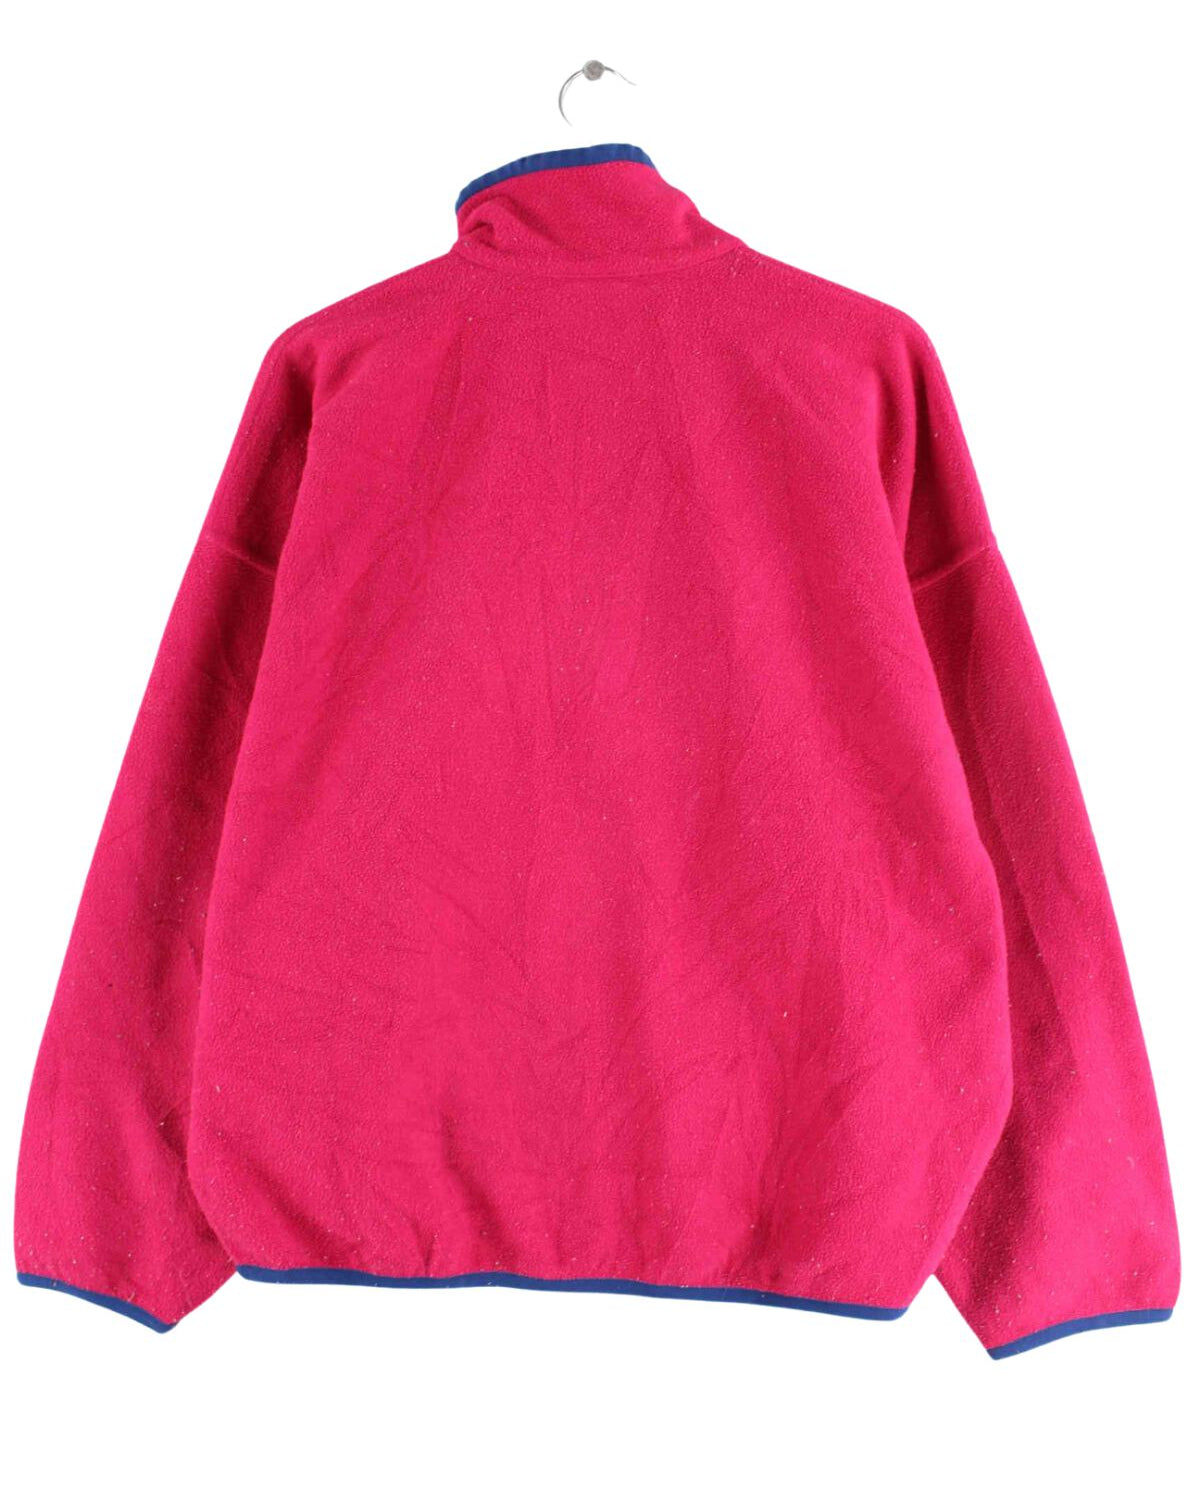 Kappa 80s Vintage Half Zip Fleece Sweater Pink M (back image)